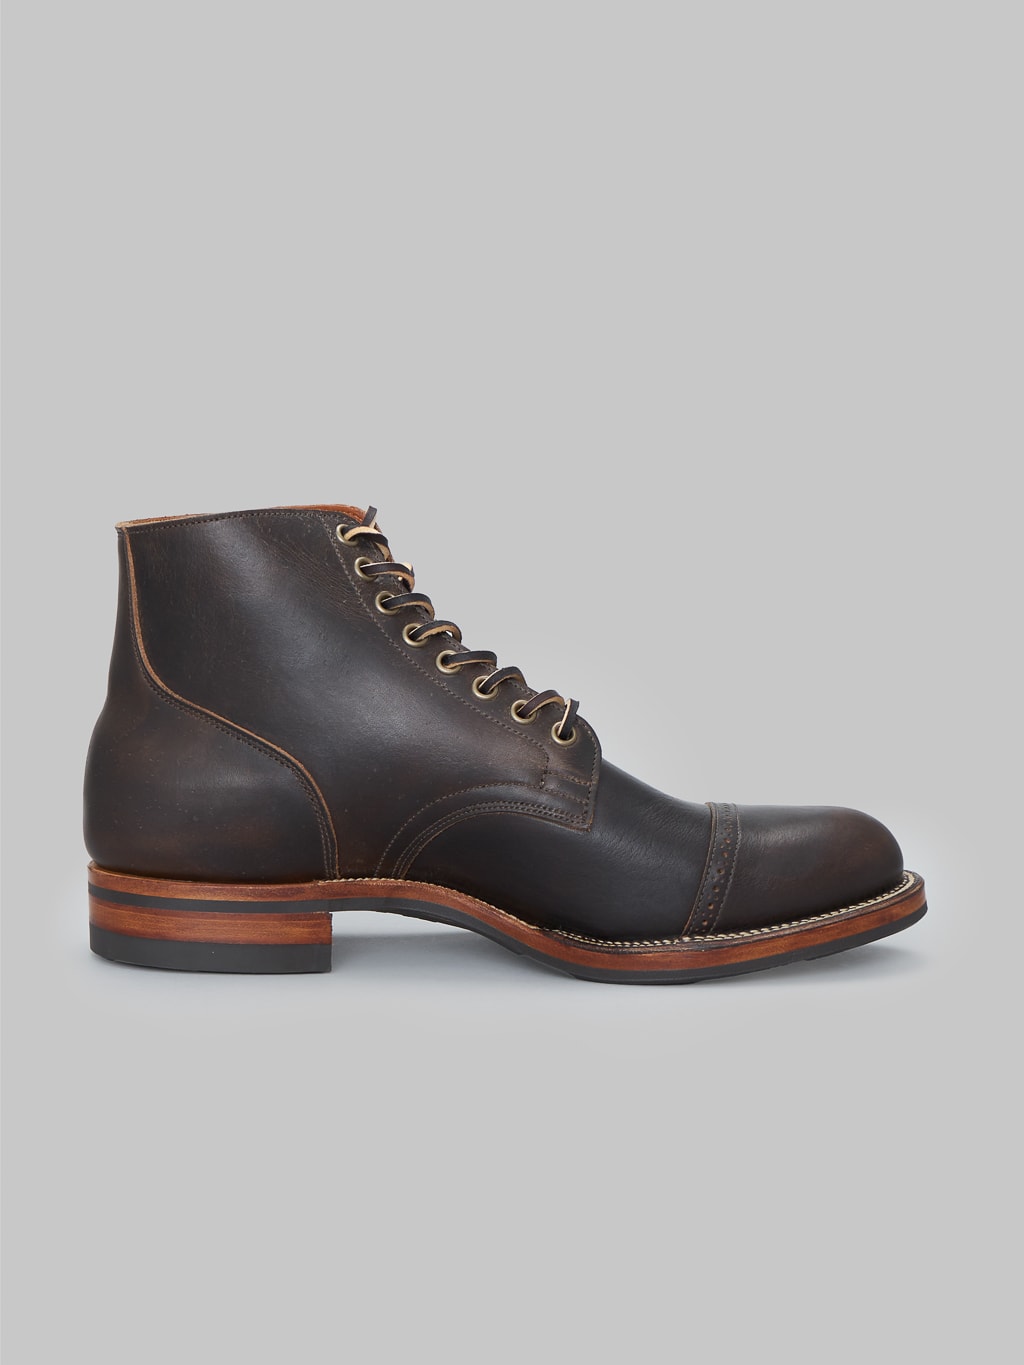 viberg service boot 2023 bct antique phoenix dark brown leather side look